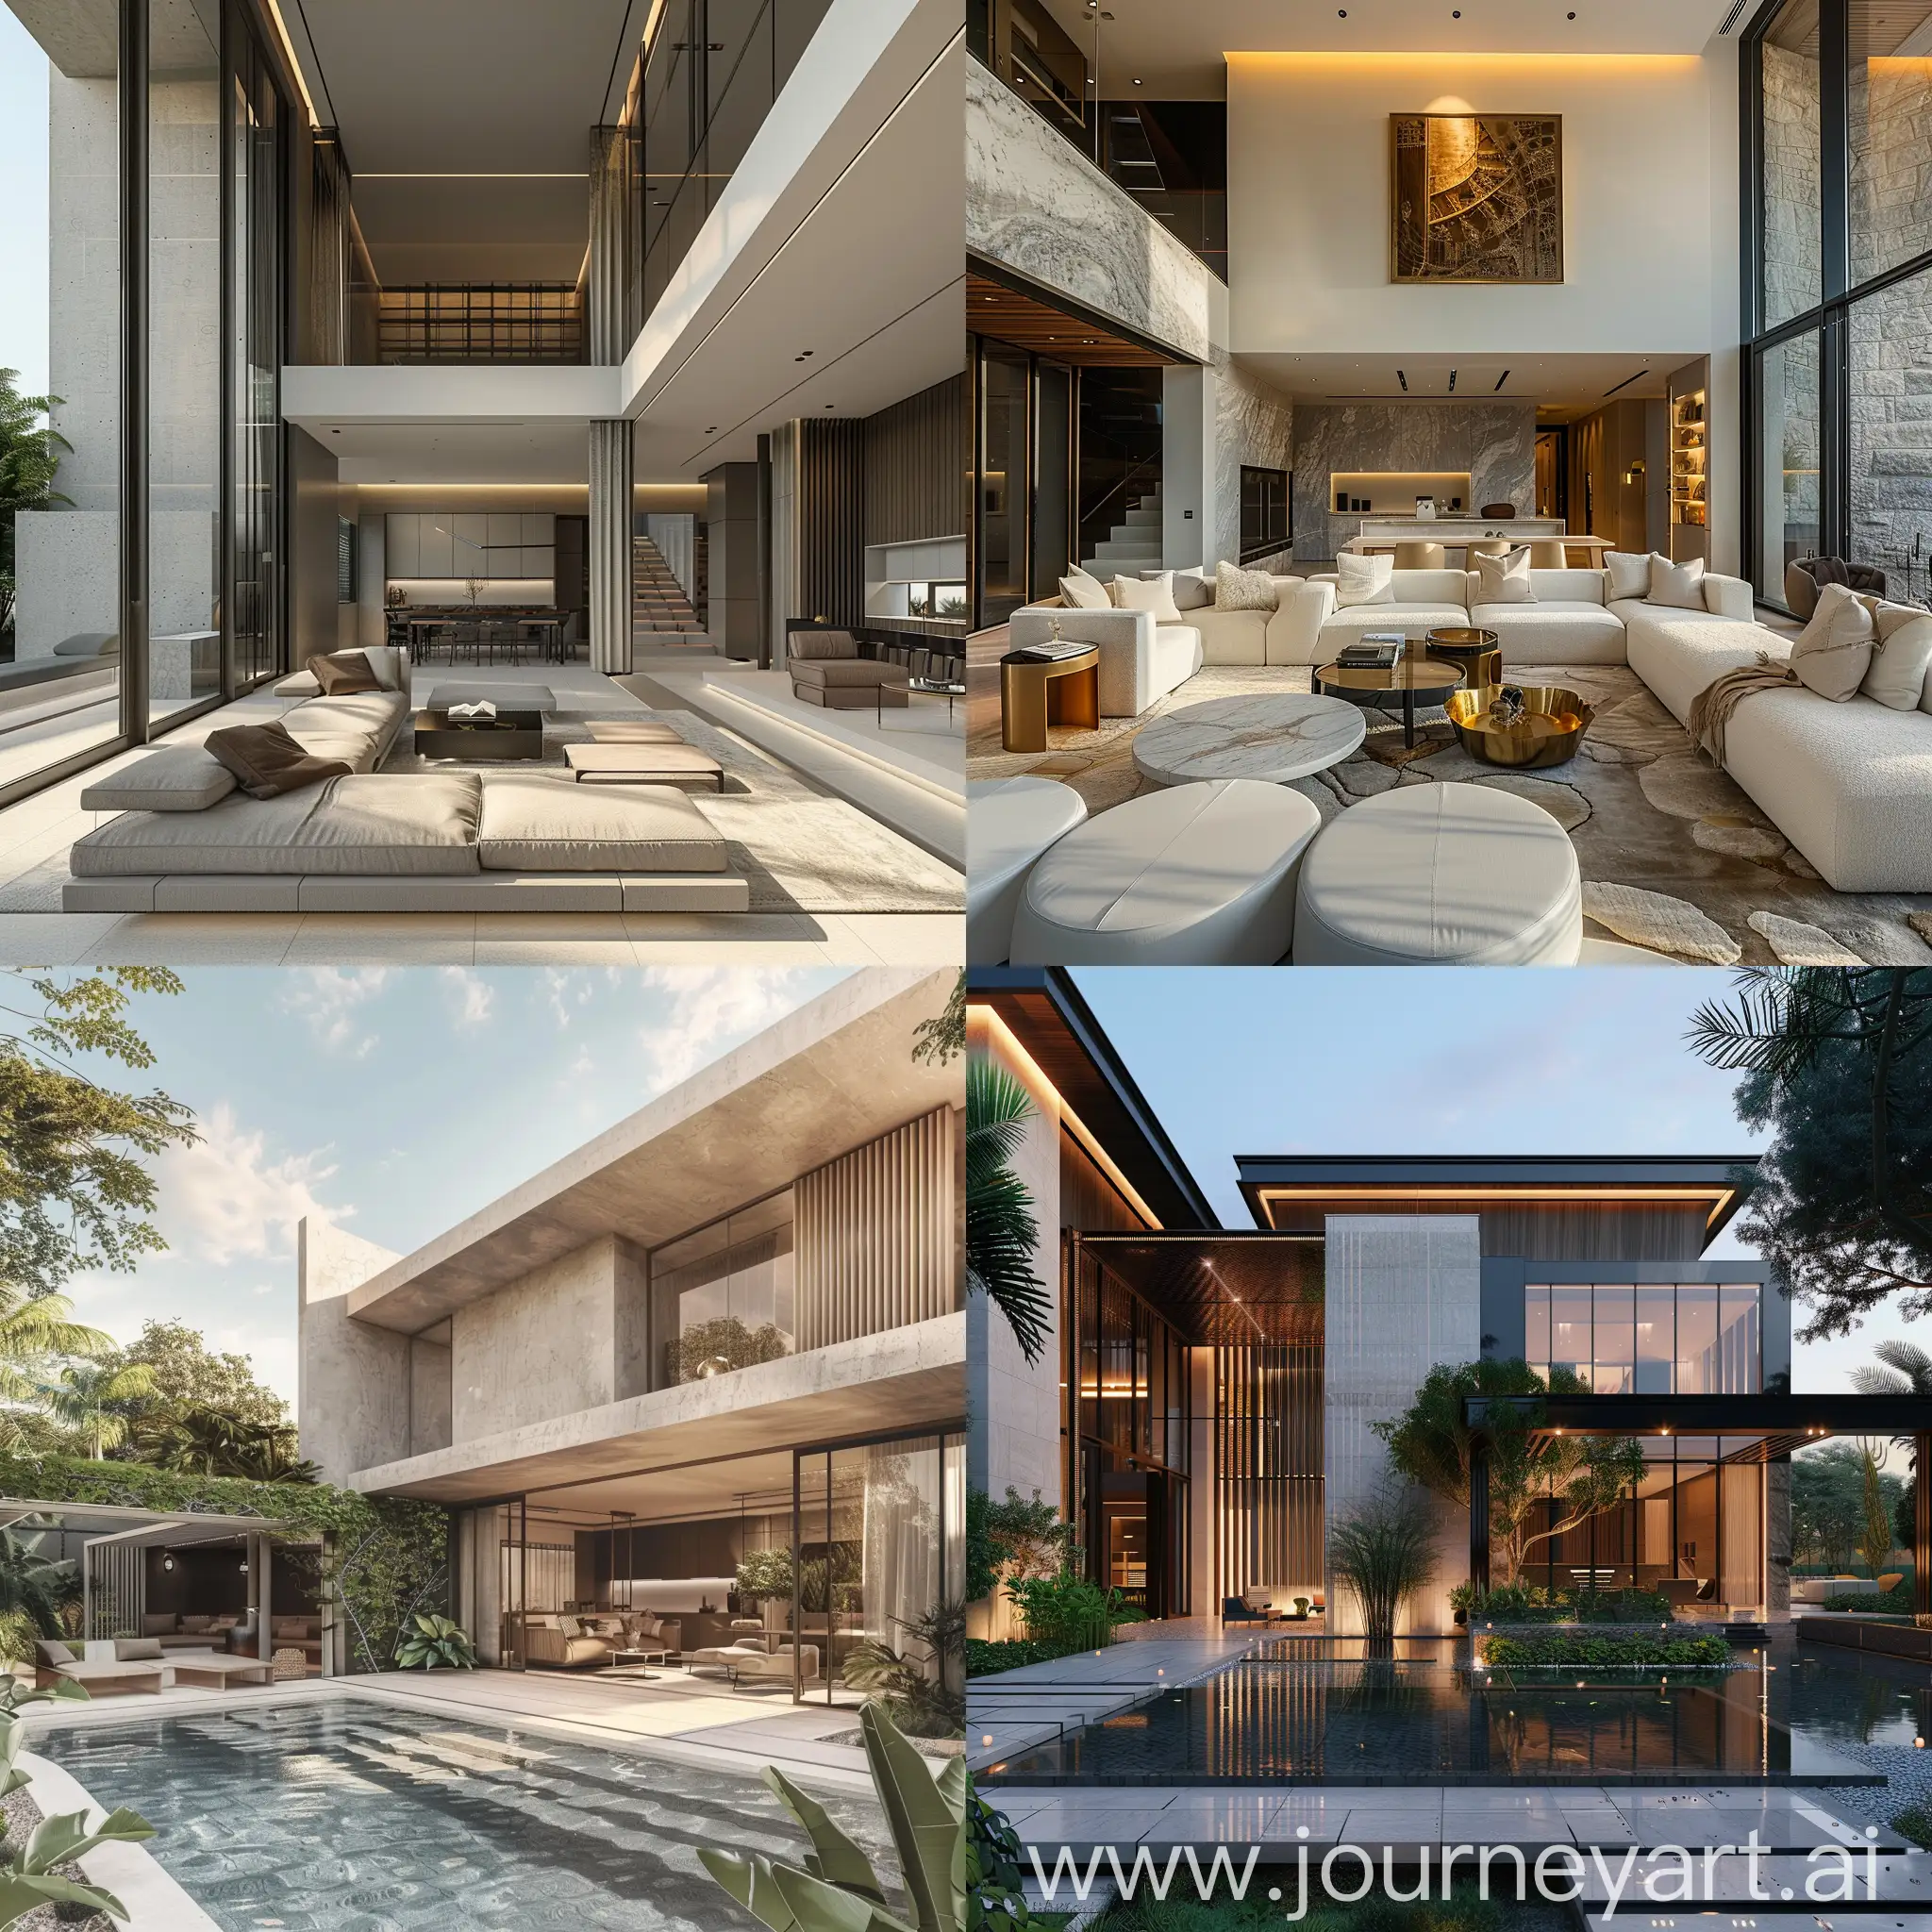 Unique-Luxury-Villa-with-Modern-Simplicity-and-Rare-Materials